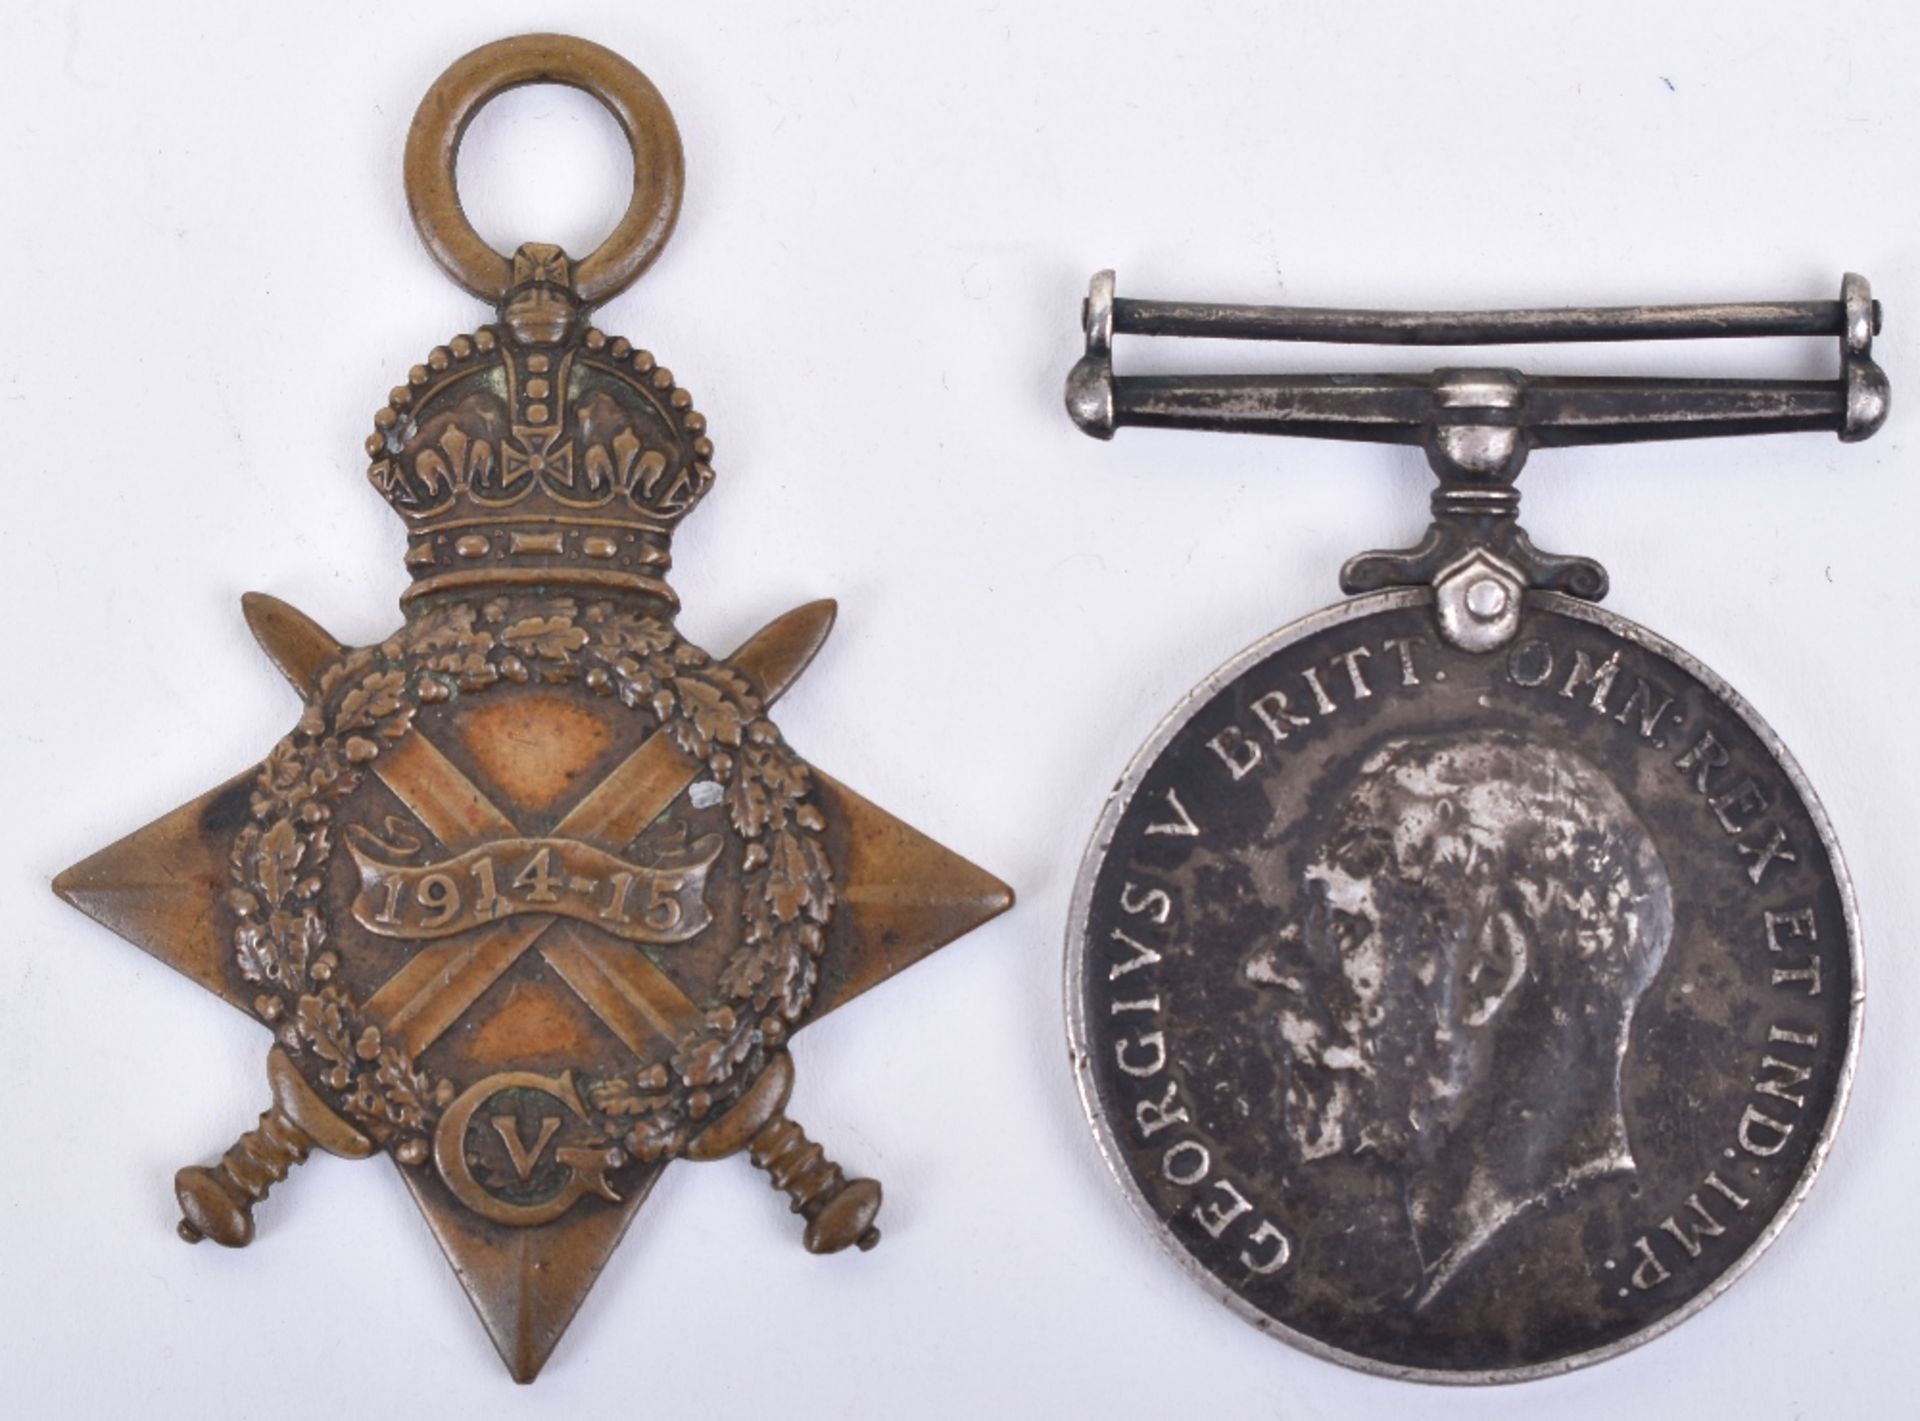 WW1 Medal Pair 10th London Regiment